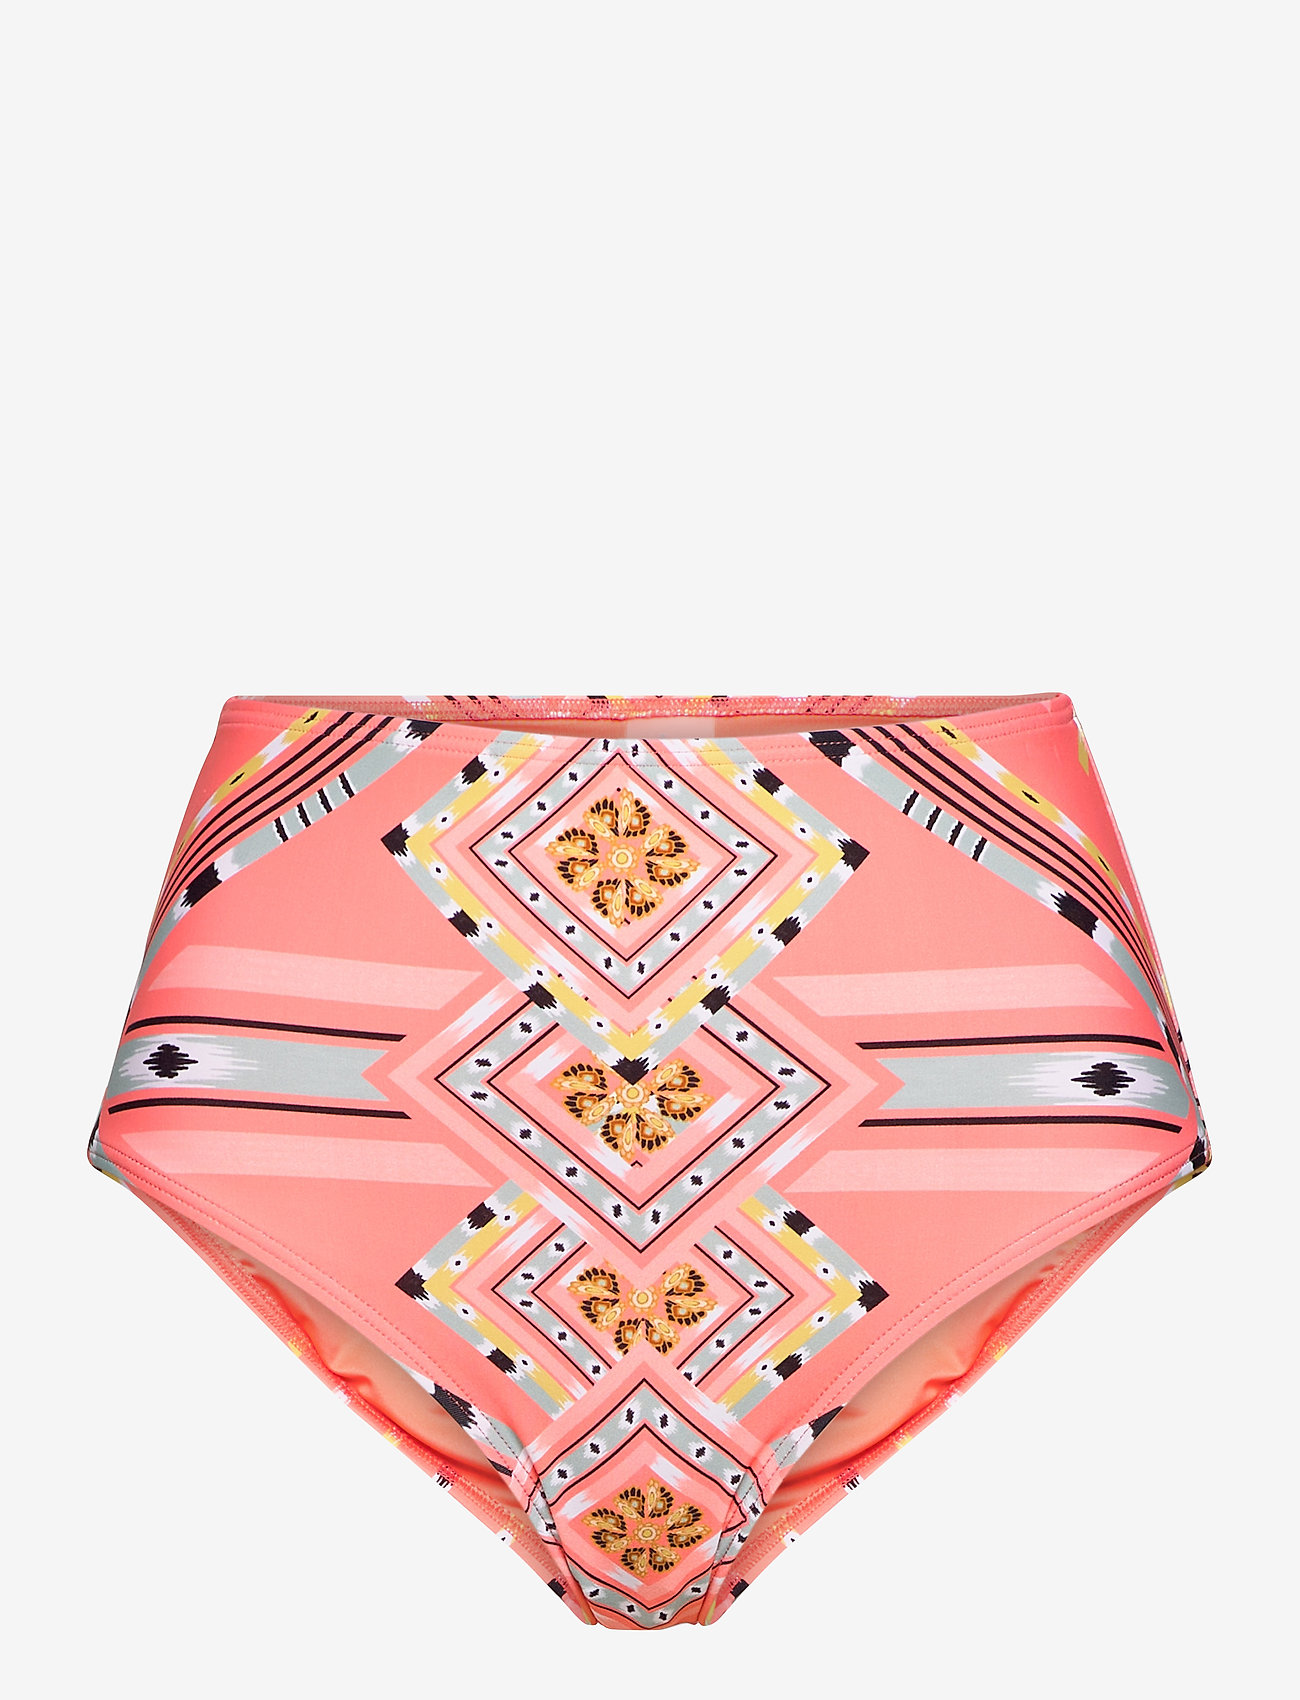 Malina - Enya bikini bottom - bikinihosen mit hoher taille - inca coral rose - 0